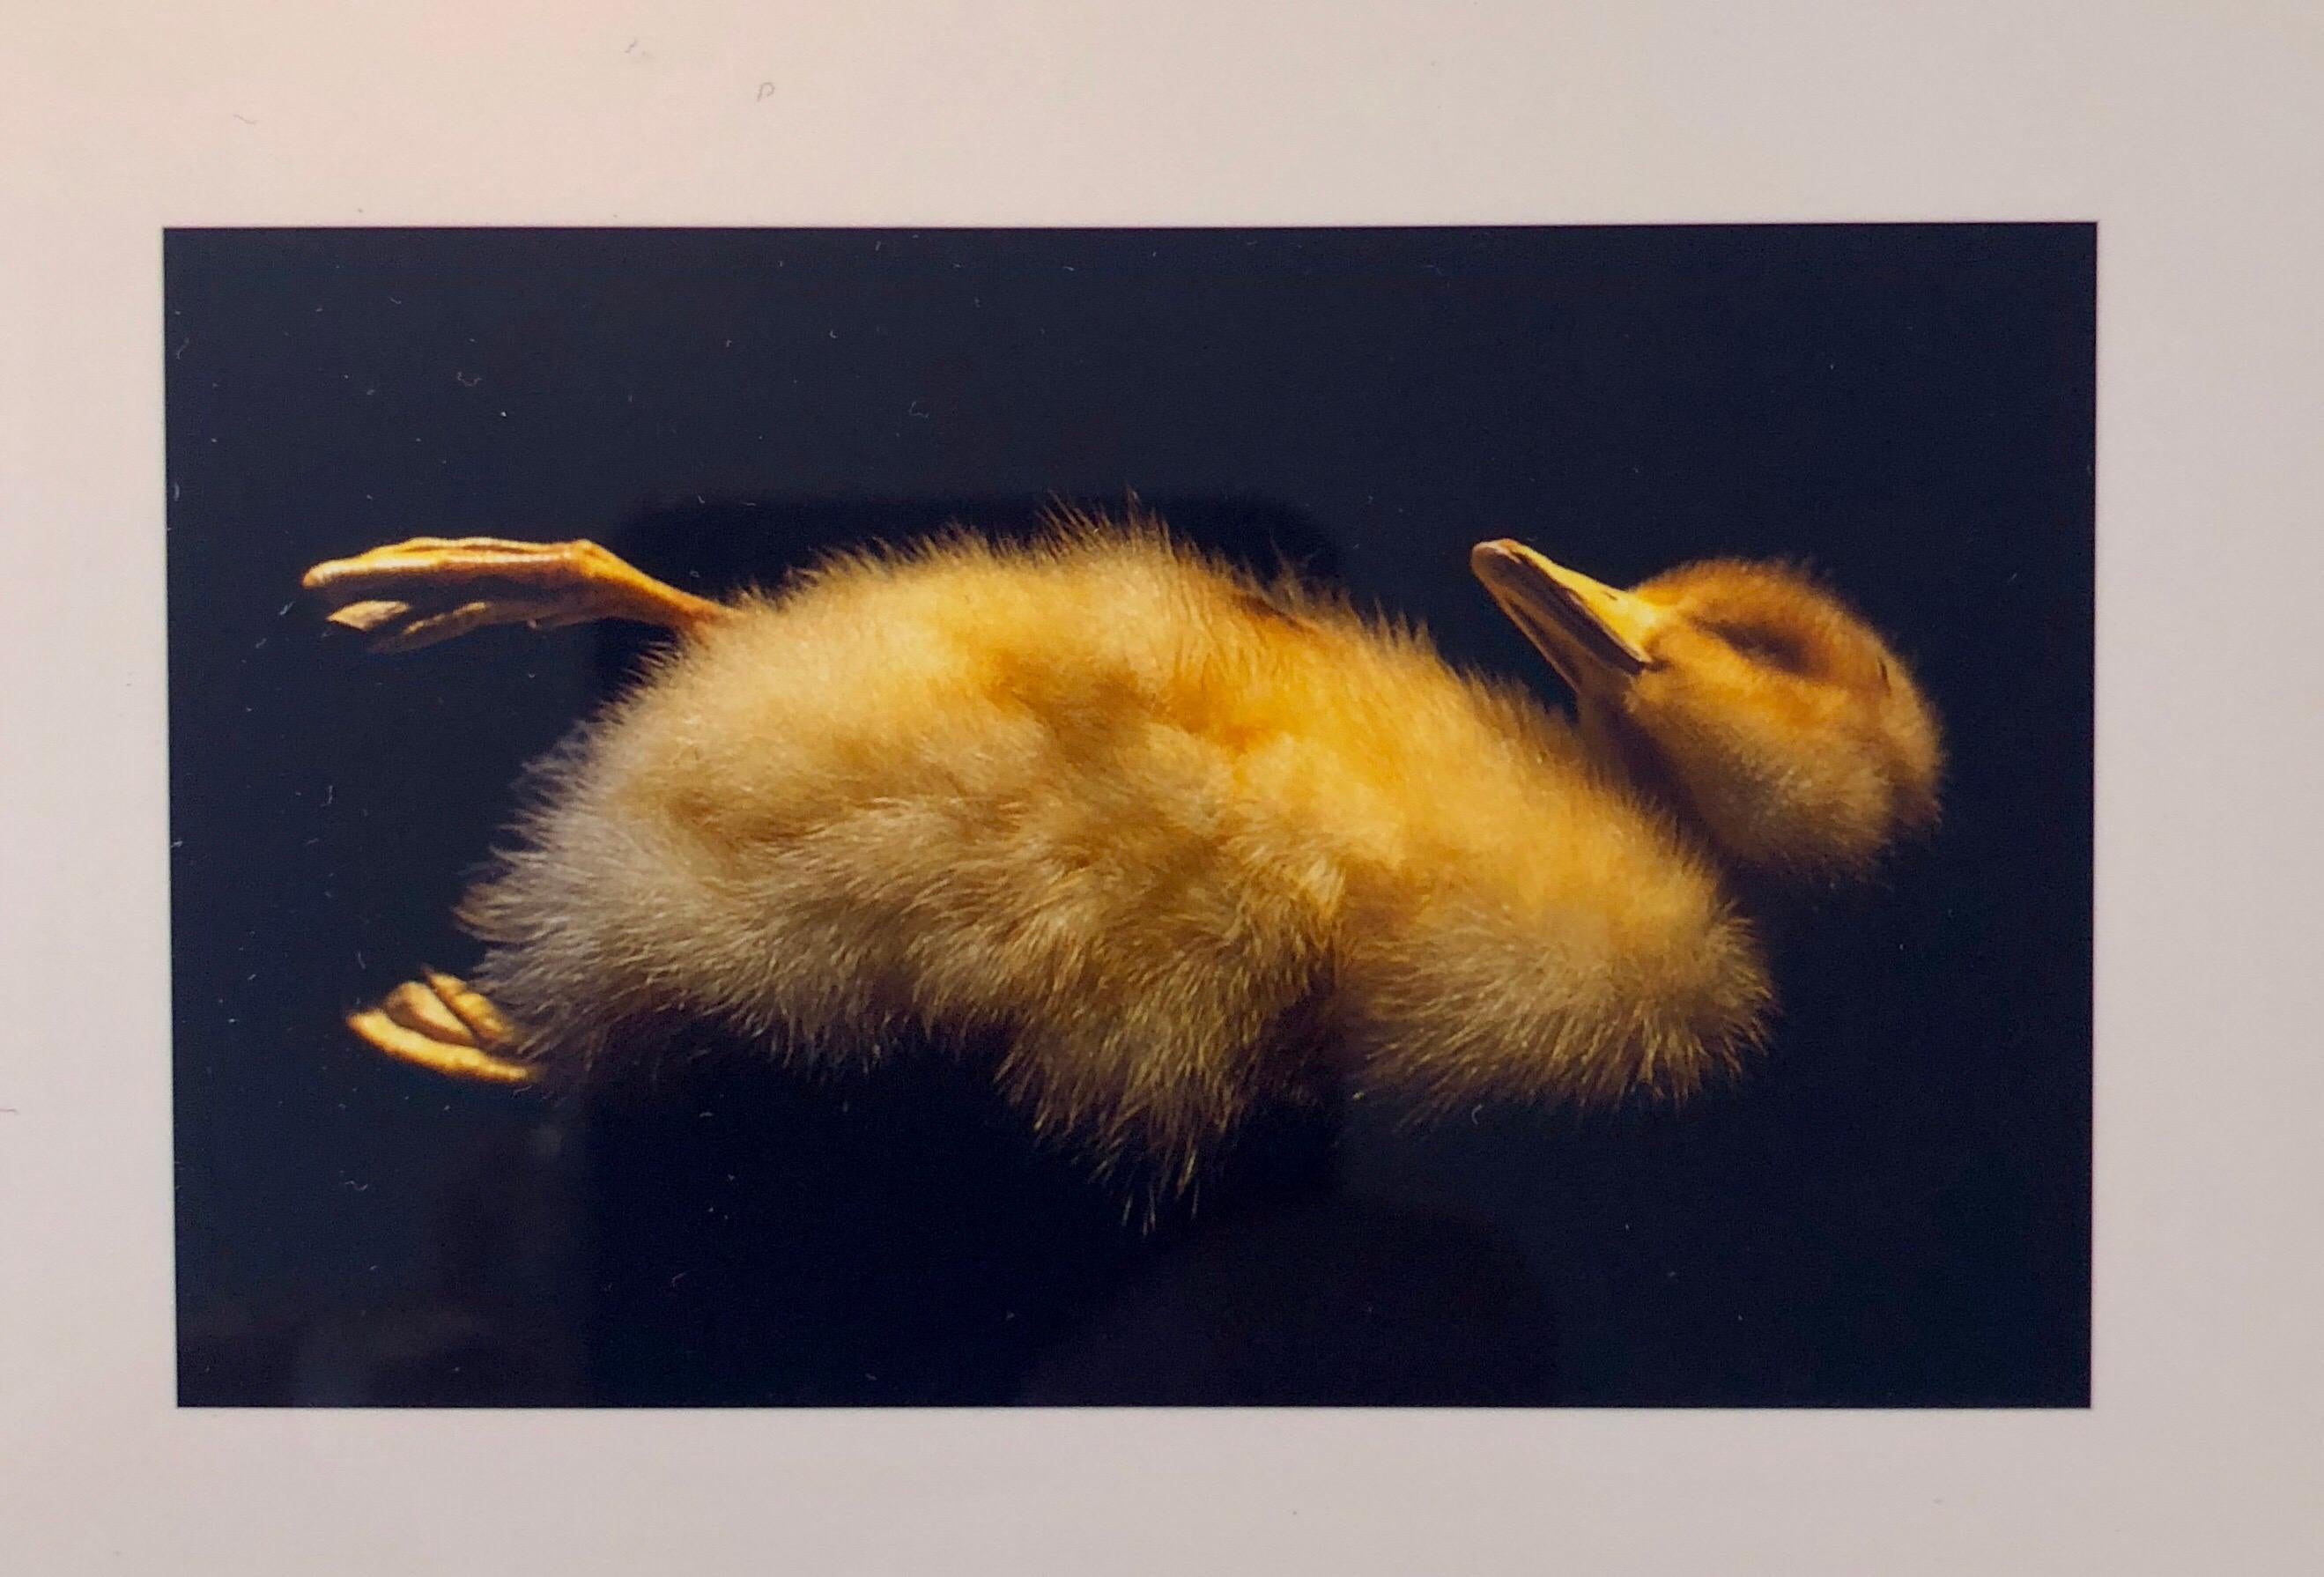 Brenda Zlamany Still-Life Photograph - Birds, Cibachrome Photograph Print, NFS Sample Conceptual Taxidermy Art